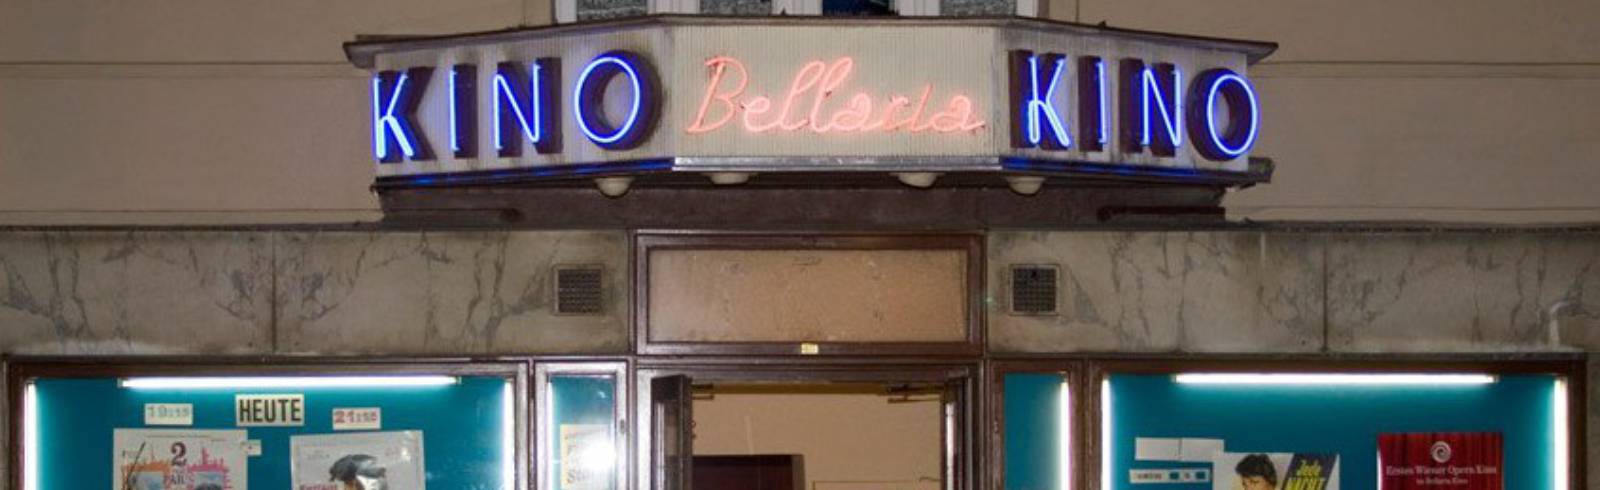 Stadt greift Bellaria Kino unter die Arme